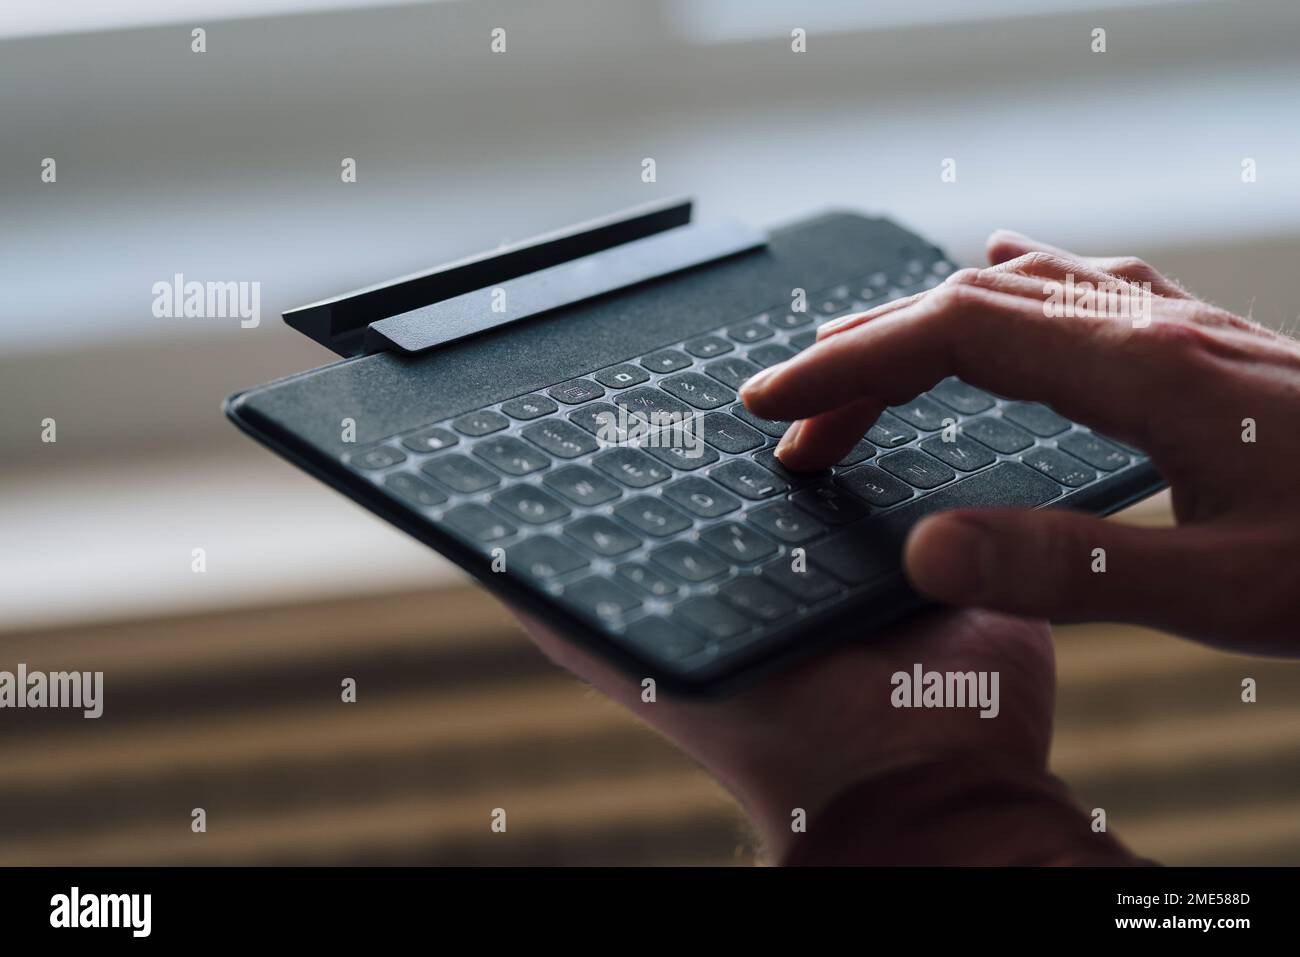 Hands of businessman using wireless keyboard Stock Photo